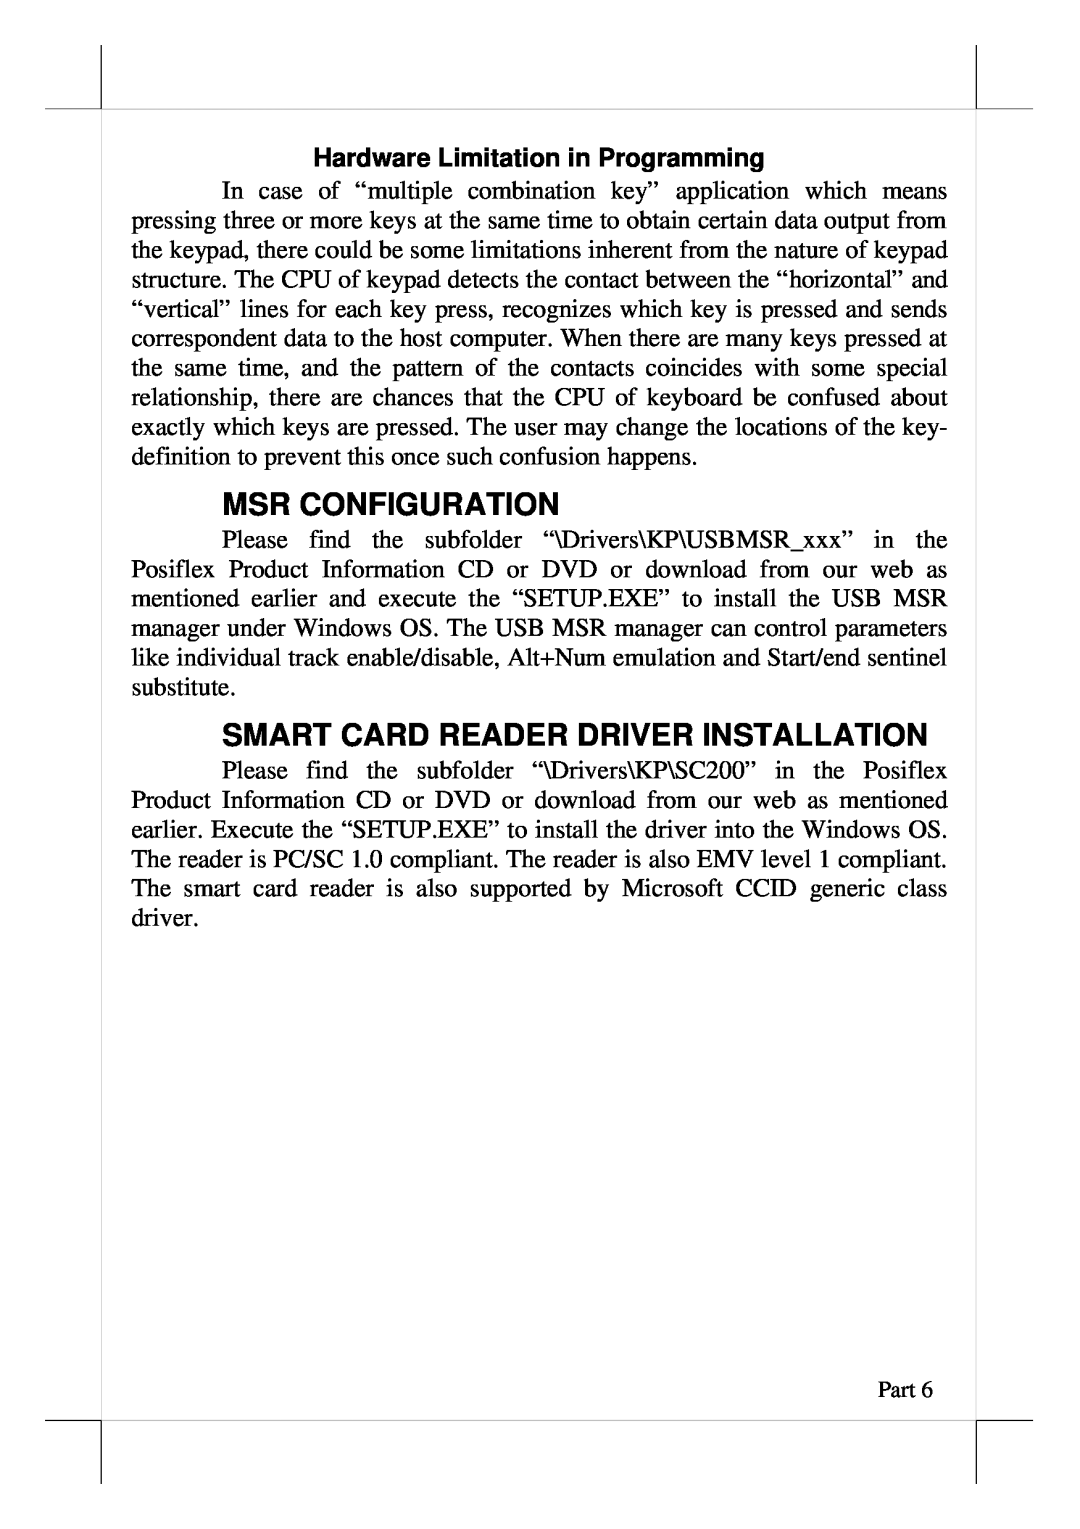 POSIFLEX Business Machines KP-300T user manual Msr Configuration, Smart Card Reader Driver Installation 